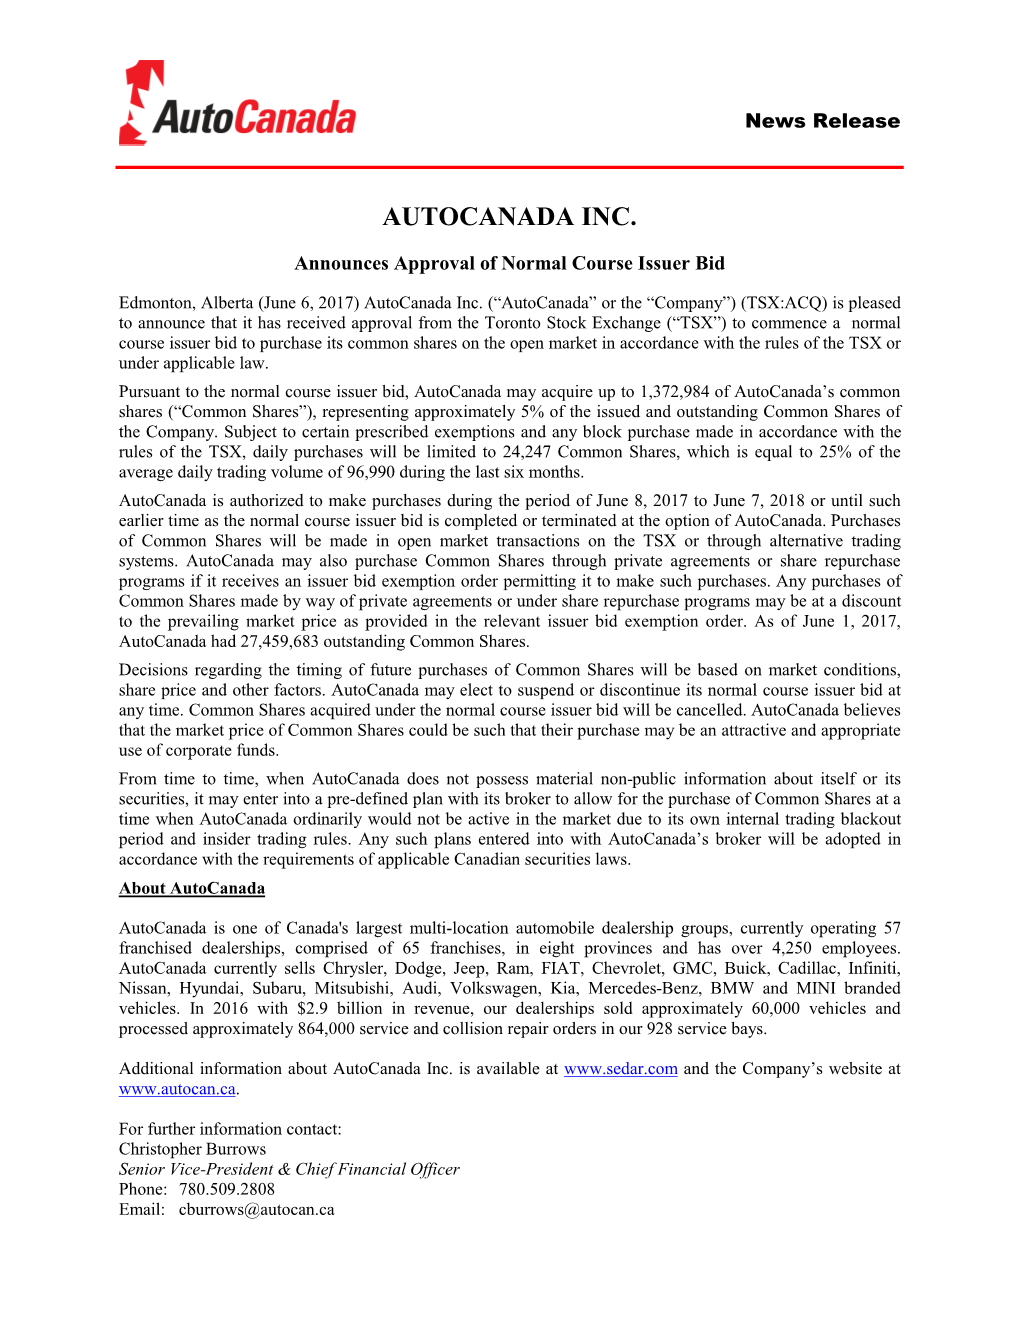 Autocanada Inc. Announces Approval Of